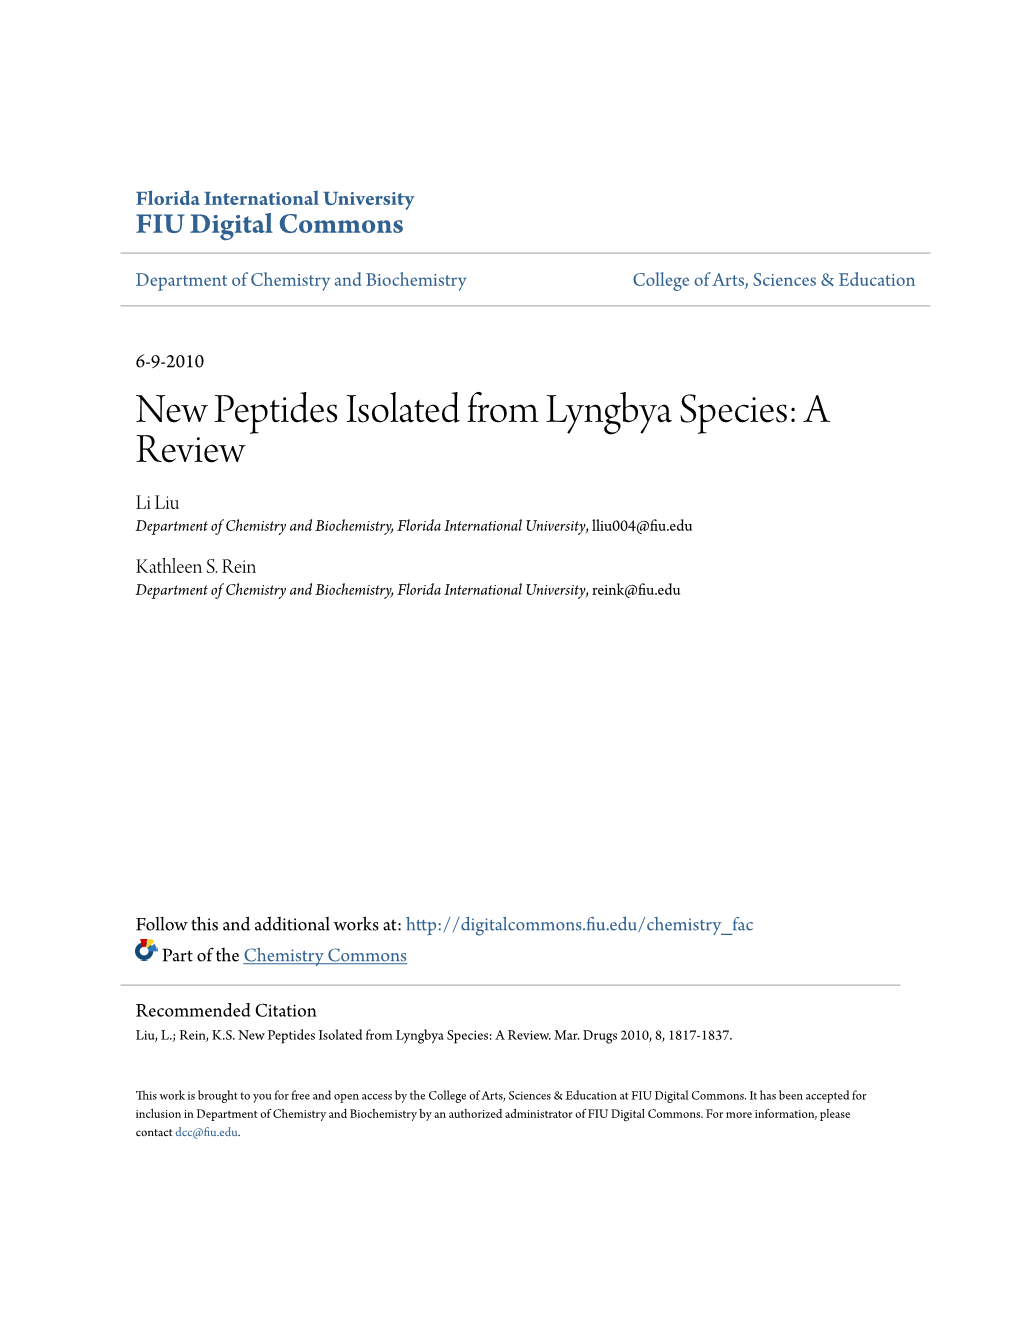 New Peptides Isolated from Lyngbya Species: a Review Li Liu Department of Chemistry and Biochemistry, Florida International University, Lliu004@Fiu.Edu